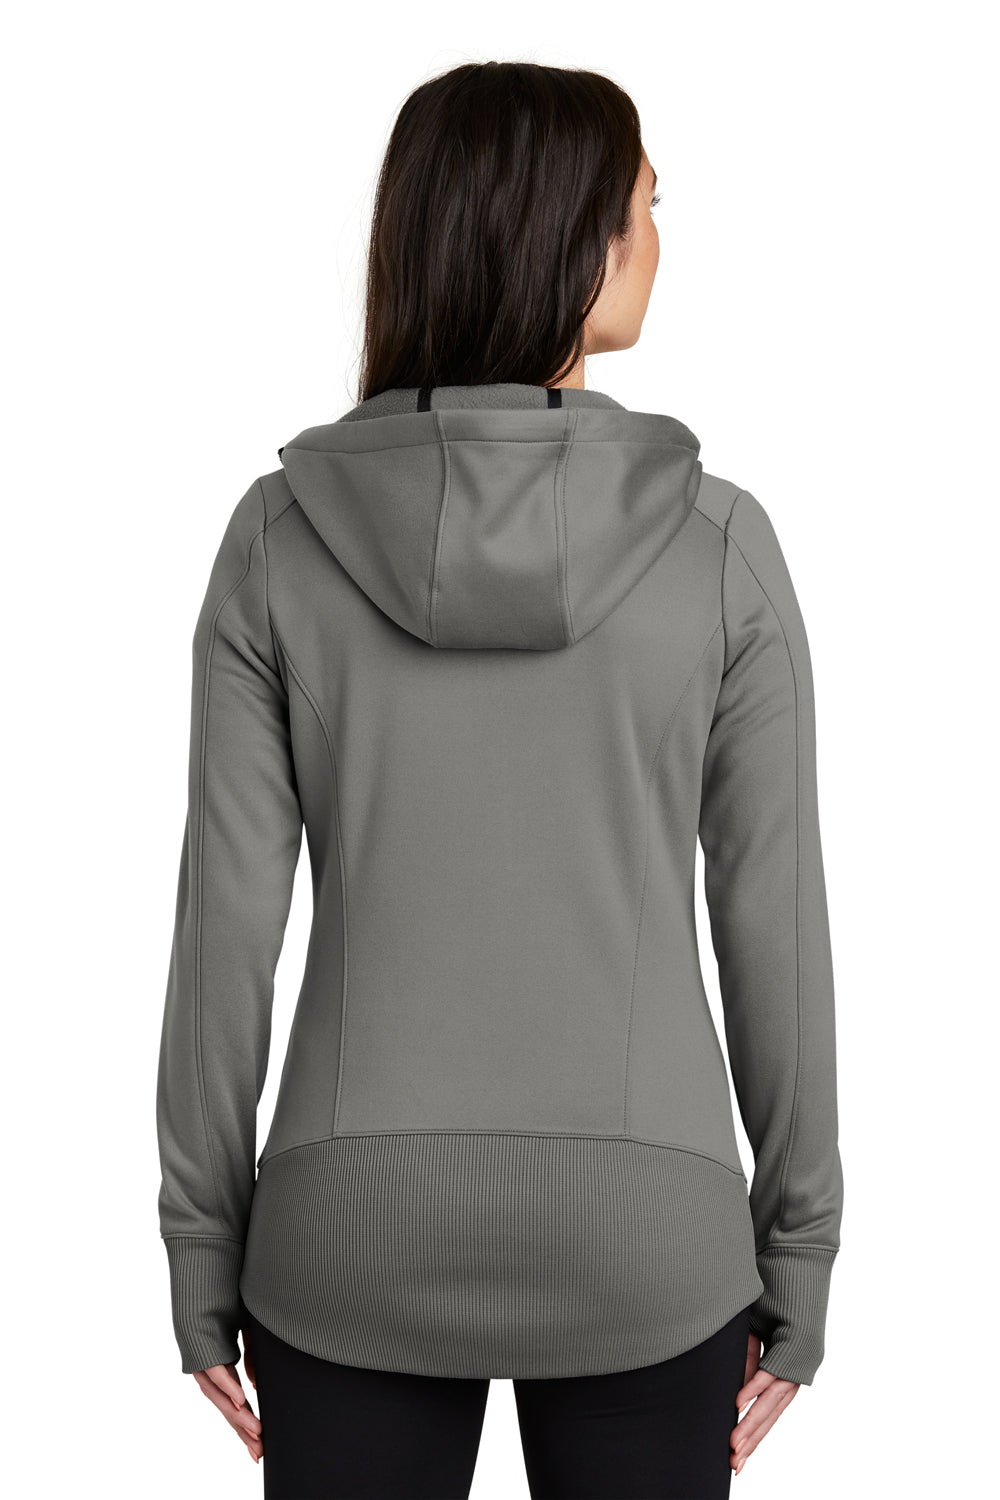 New Era LNEA522 Womens Venue Moisture Wicking Fleece Full Zip Hooded Sweatshirt Hoodie Shadow Grey Back